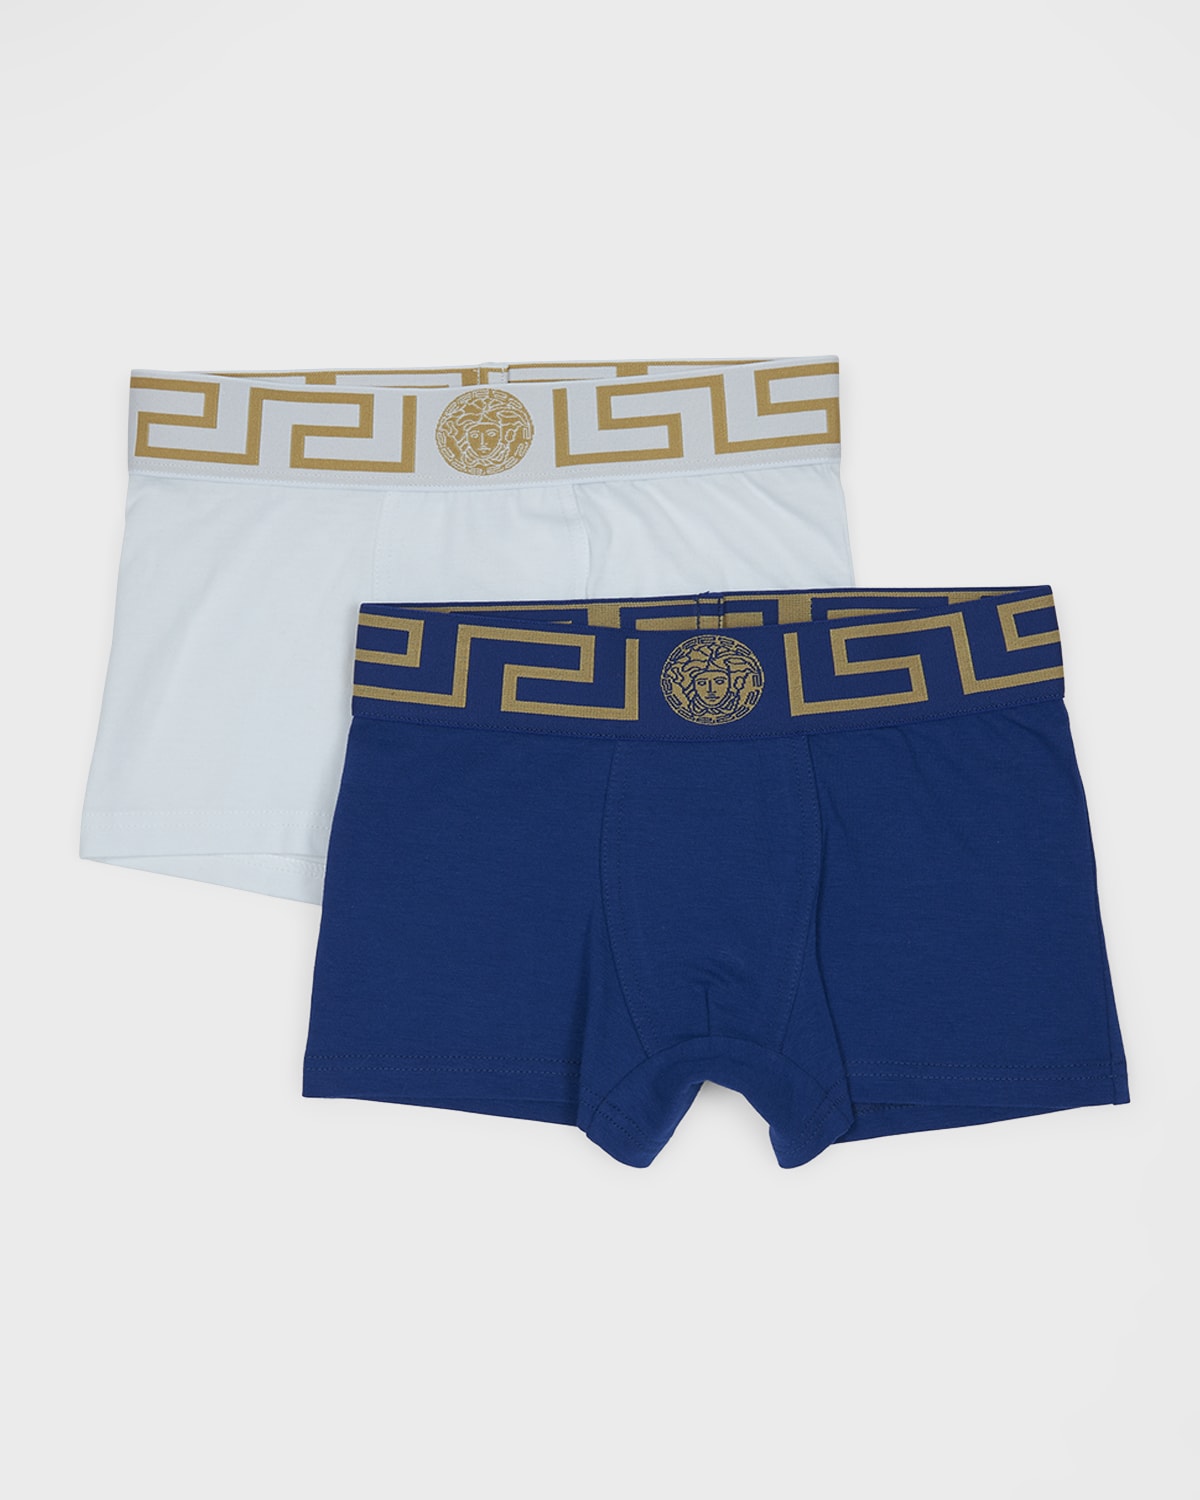 Metallic Versace Cotton Greca Print Underwear in Golden Mens Clothing Underwear Boxers for Men 